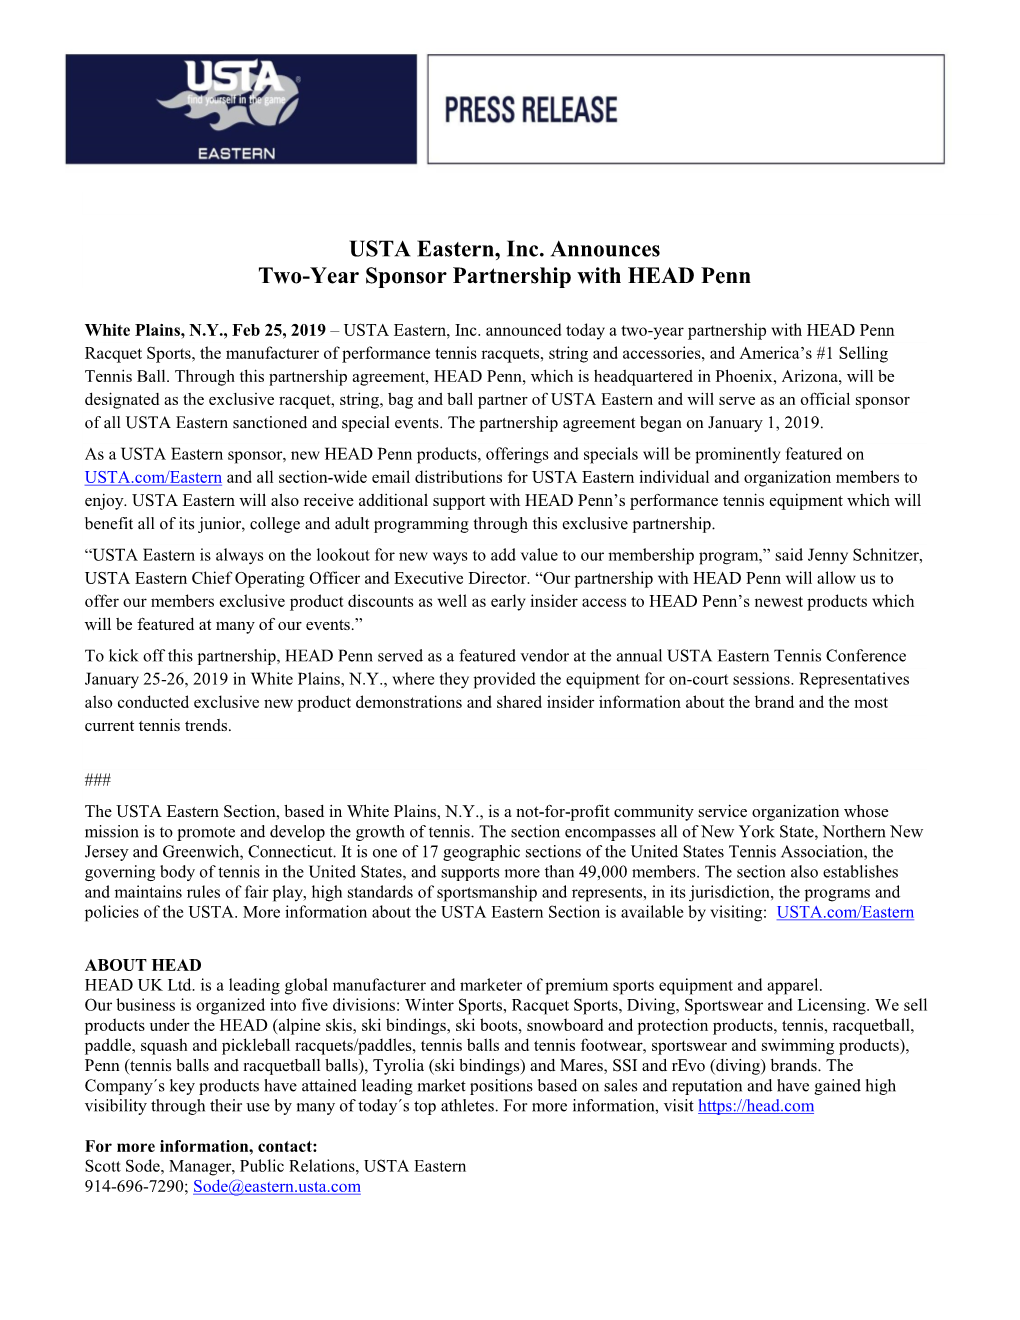 USTA Eastern, Inc. Announces Two-Year Sponsor Partnership with HEAD Penn